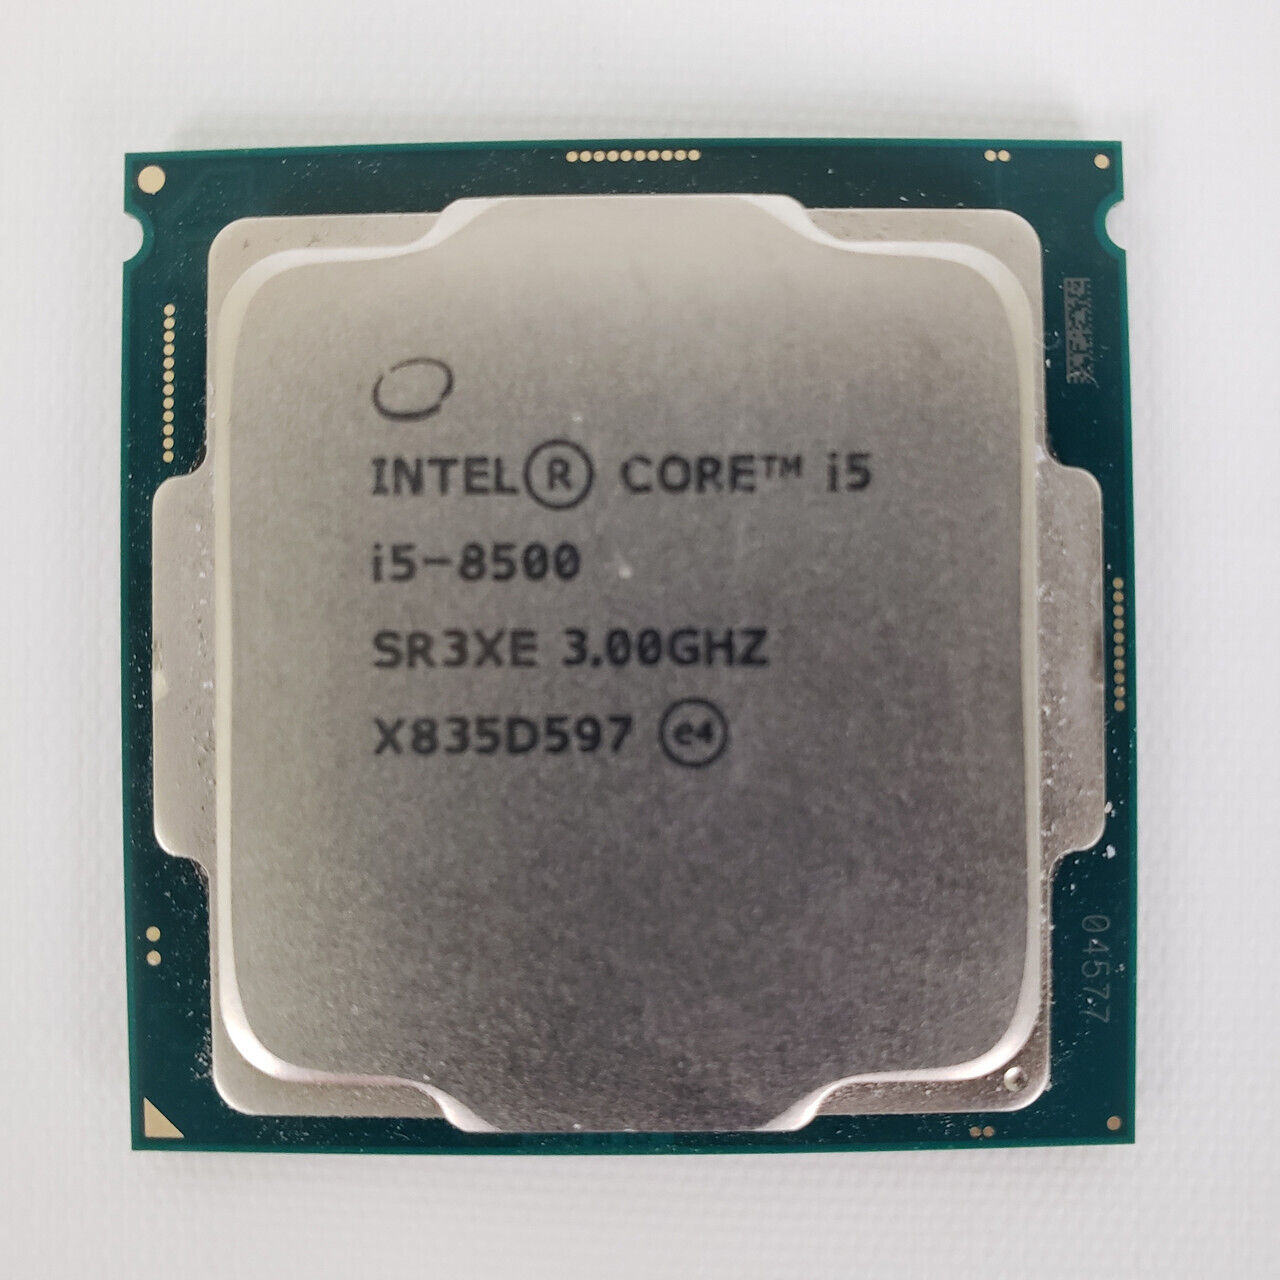 Intel Core i5-8500 SR3XE 3.00GHz Processor | Grade A